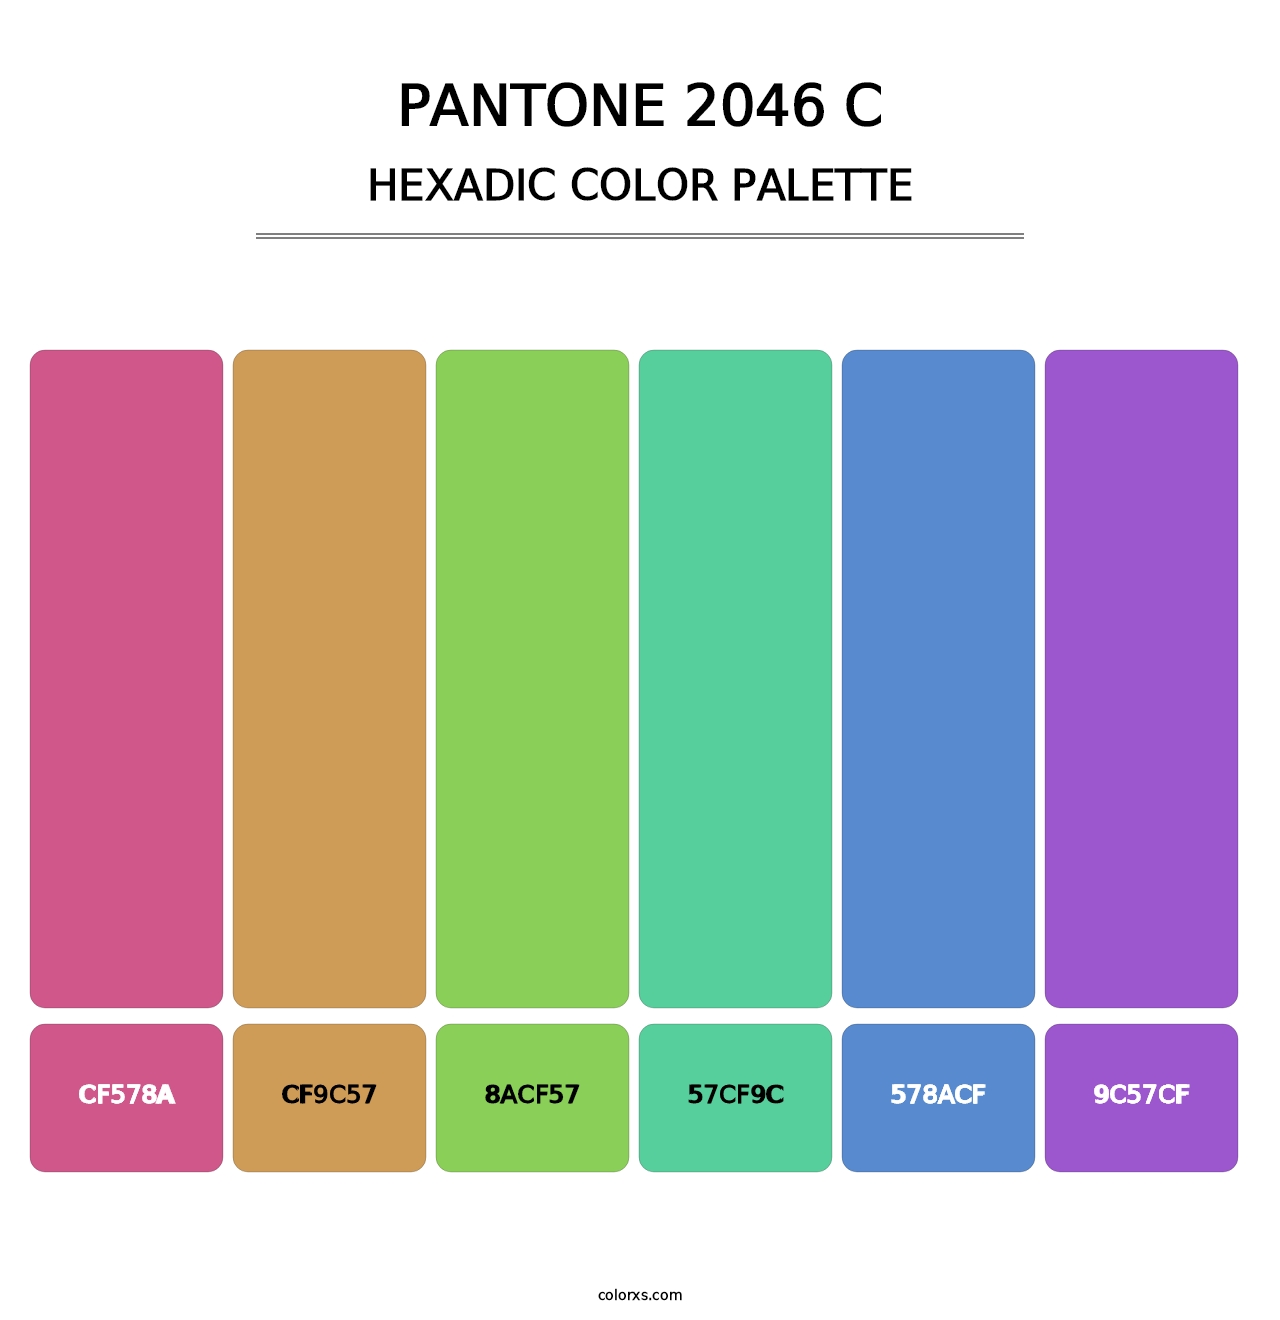 PANTONE 2046 C - Hexadic Color Palette